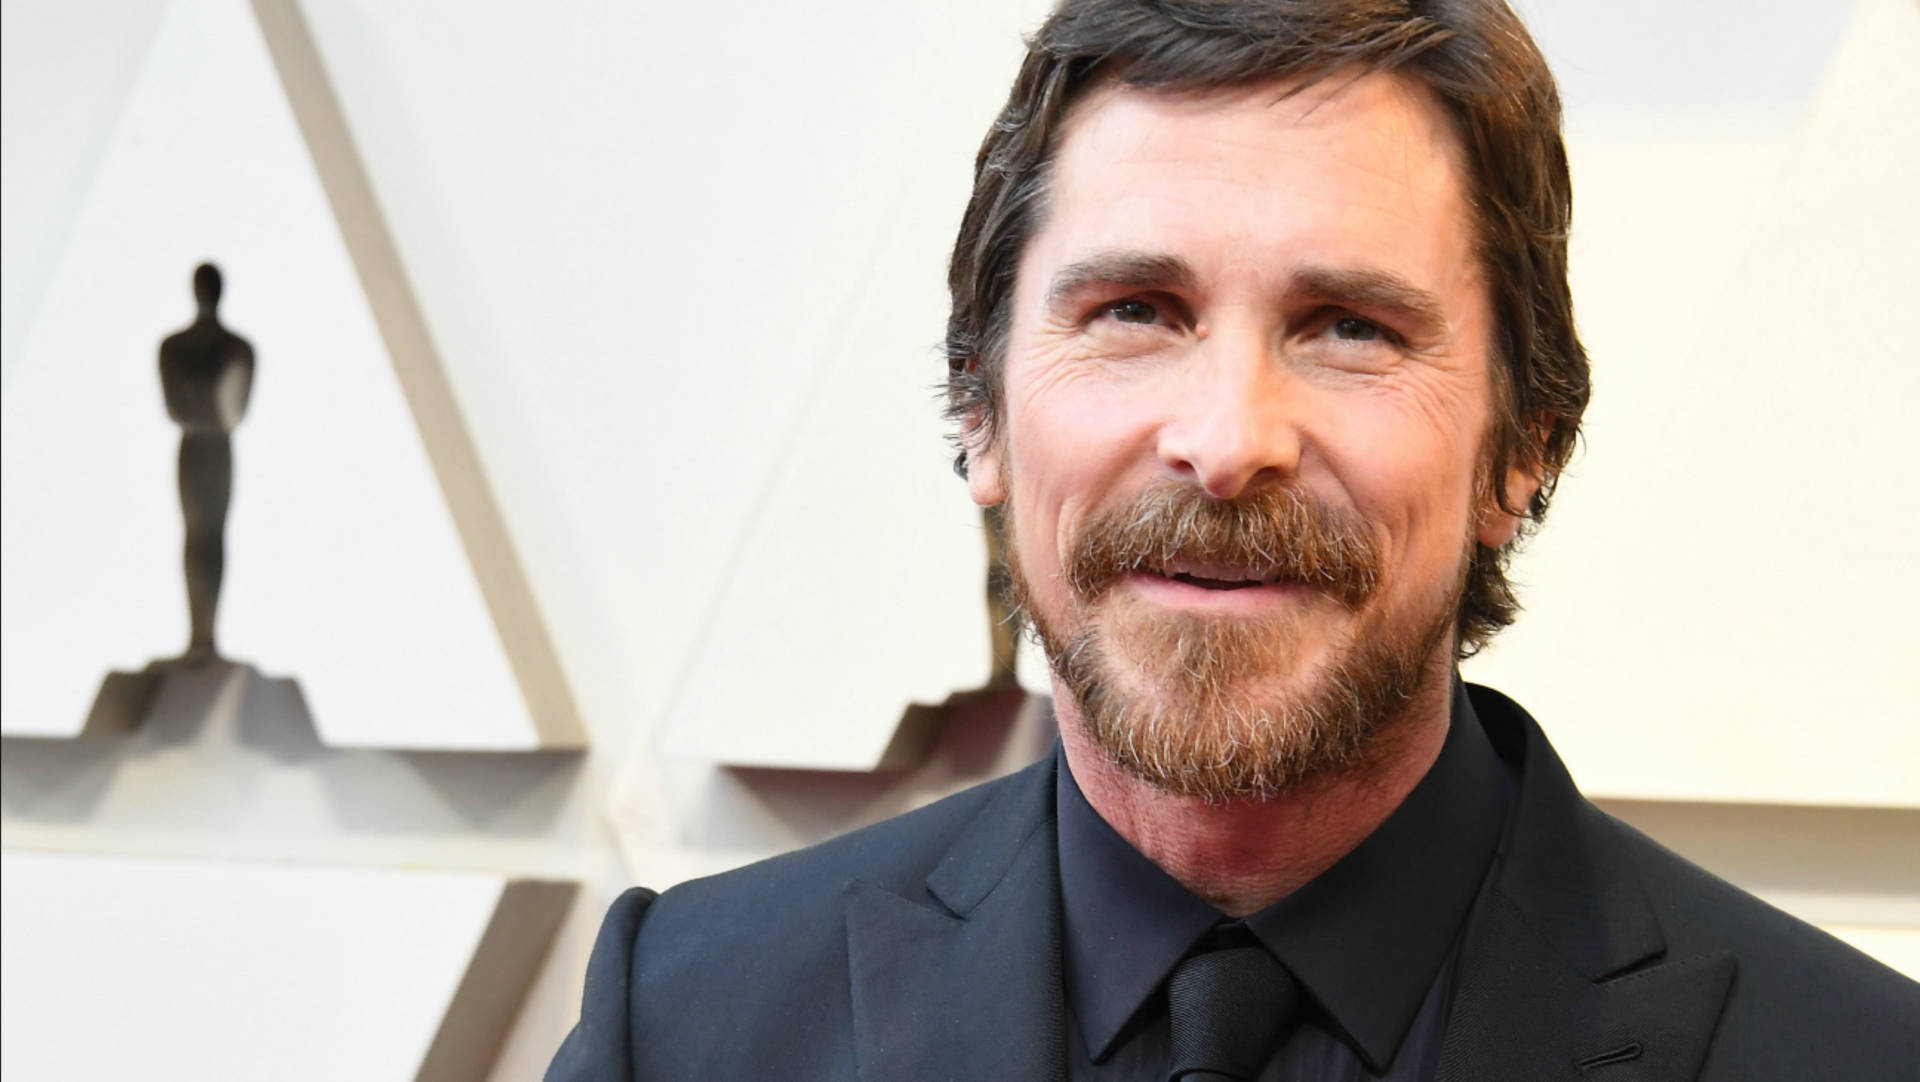 Christian Bale At Oscars 2011 Background